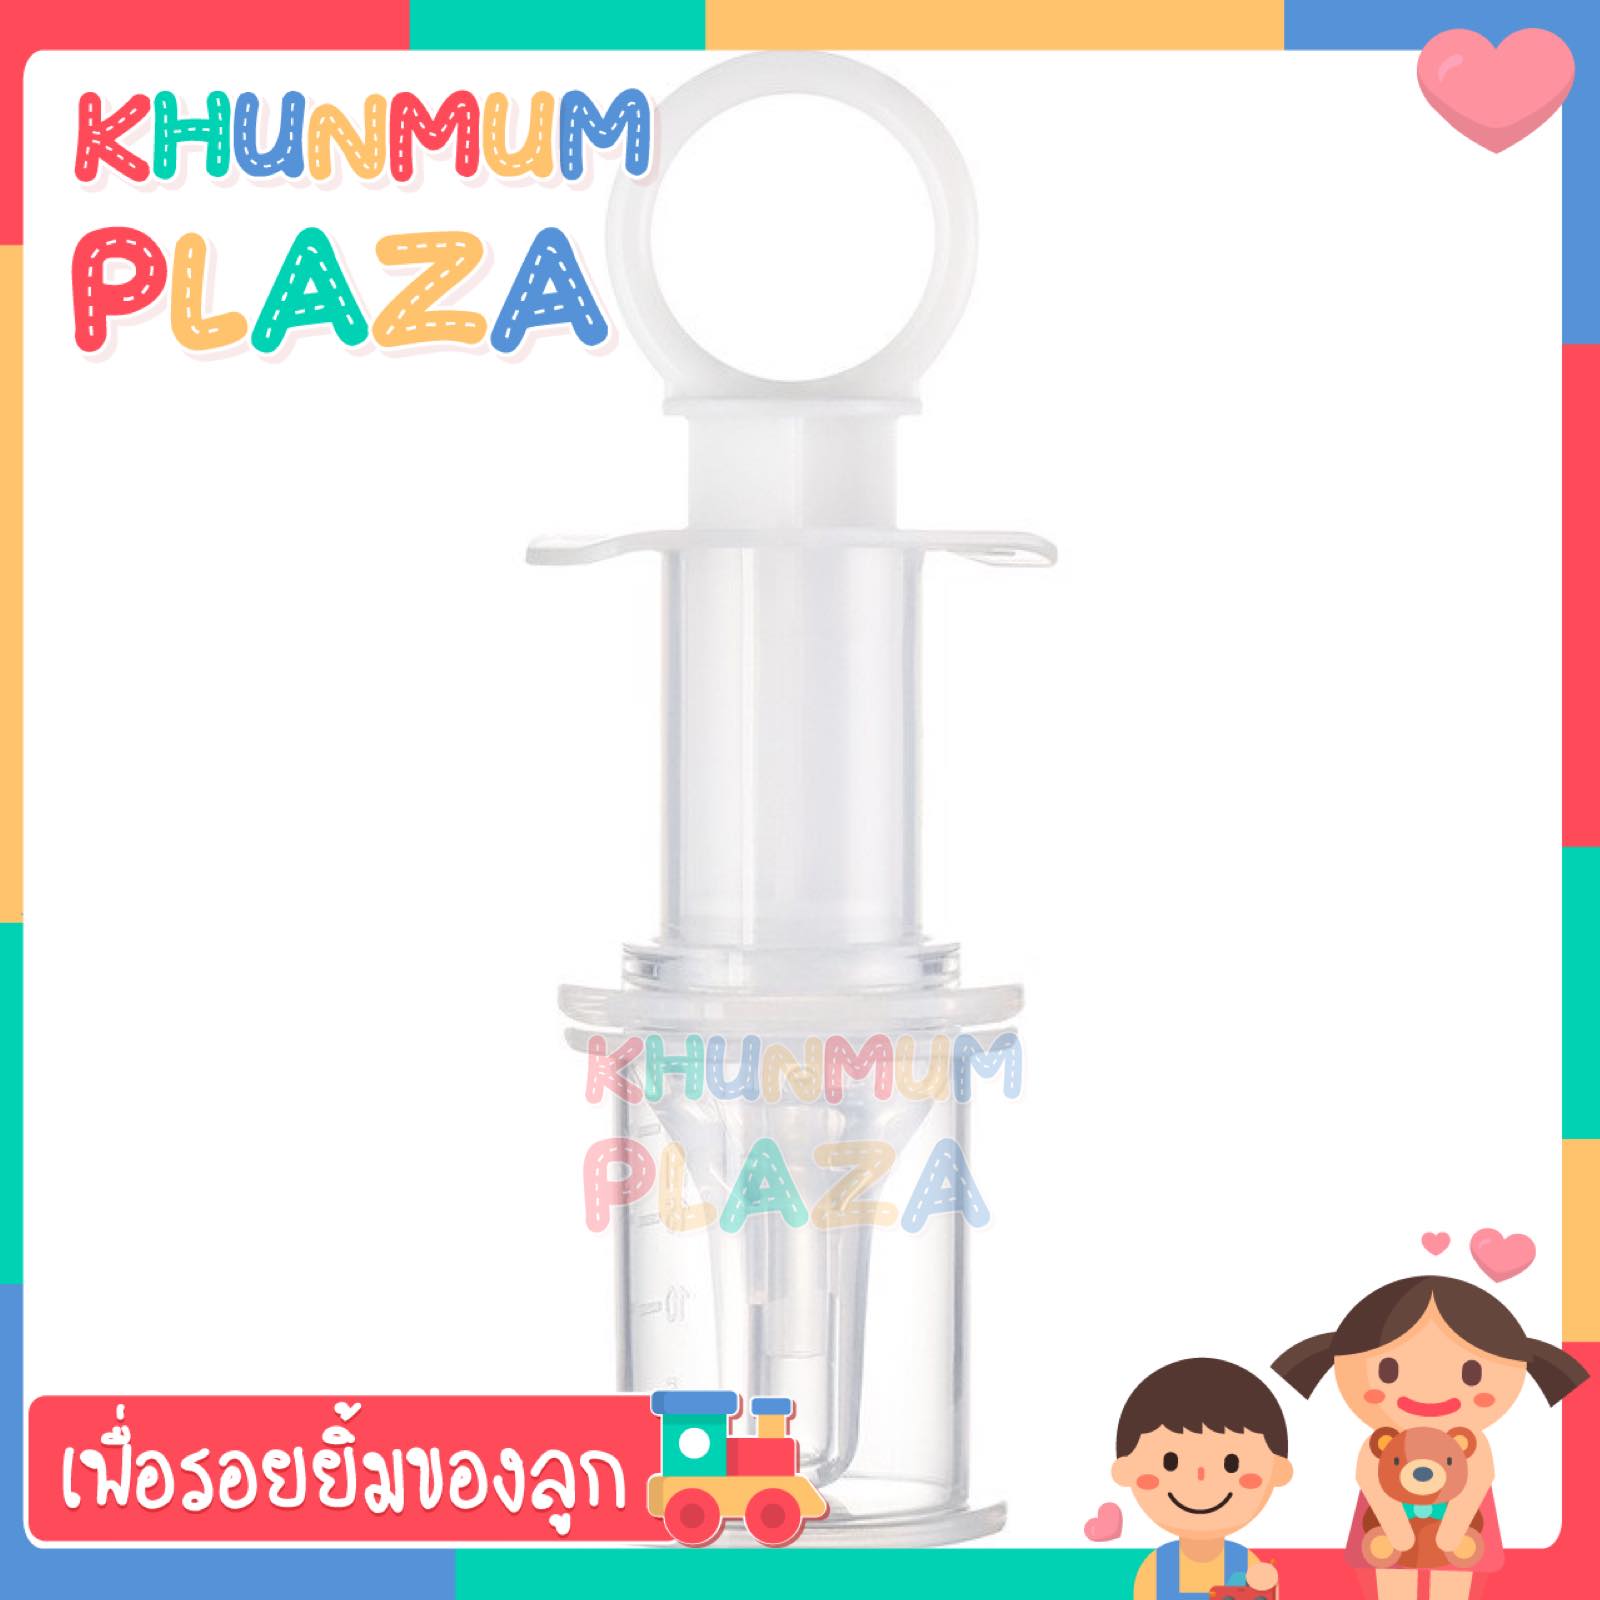 Khunmumplaza หลอดแก้วกินยา หลอดเข็มกินยาสำหรับเด็ก กินยาง่ายขึ้น สะดวกพกพา